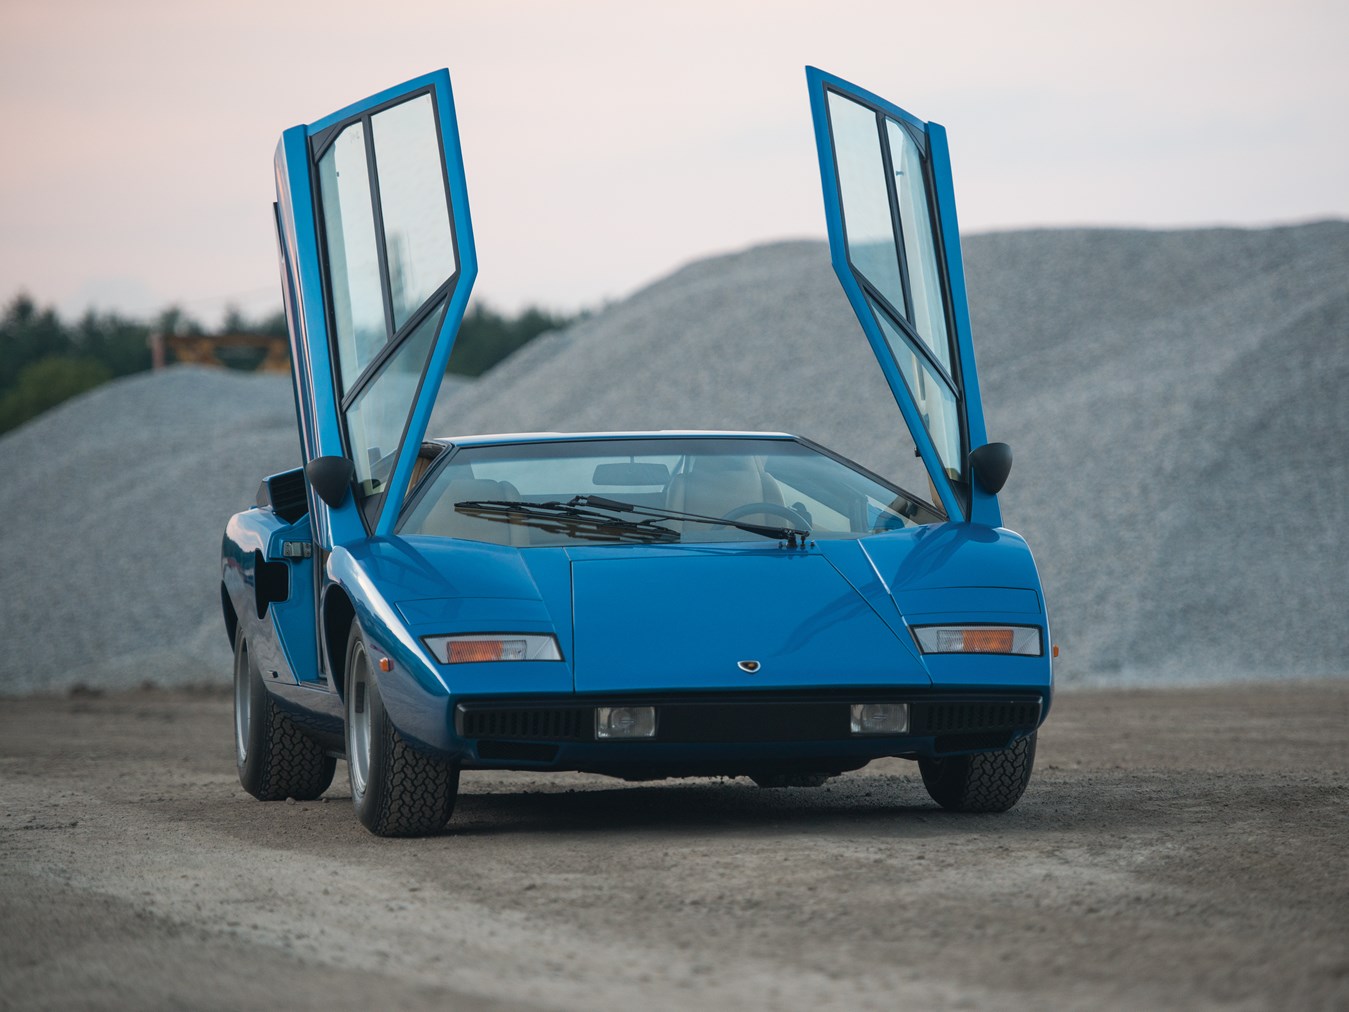 Lamborghini Countach, Blue cars, Classic car Wallpaper